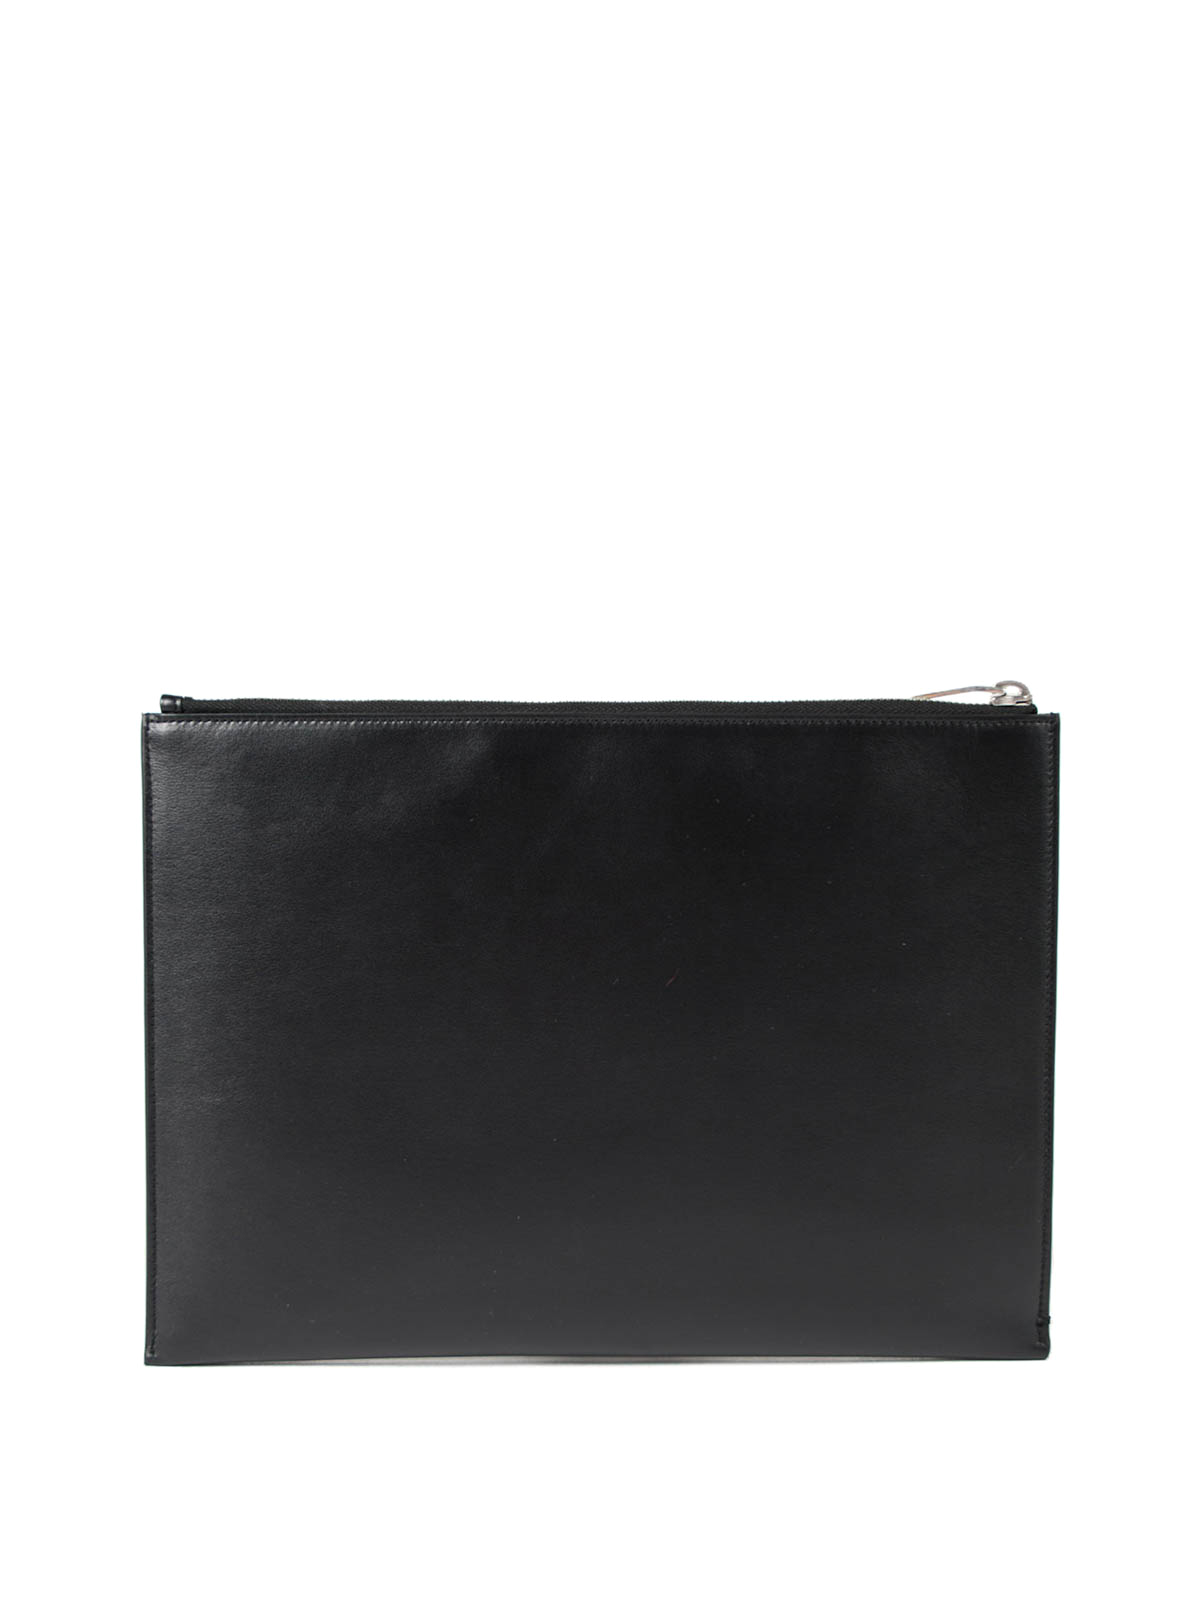 Cases & Covers Saint Laurent - YSL patch leather tablet case